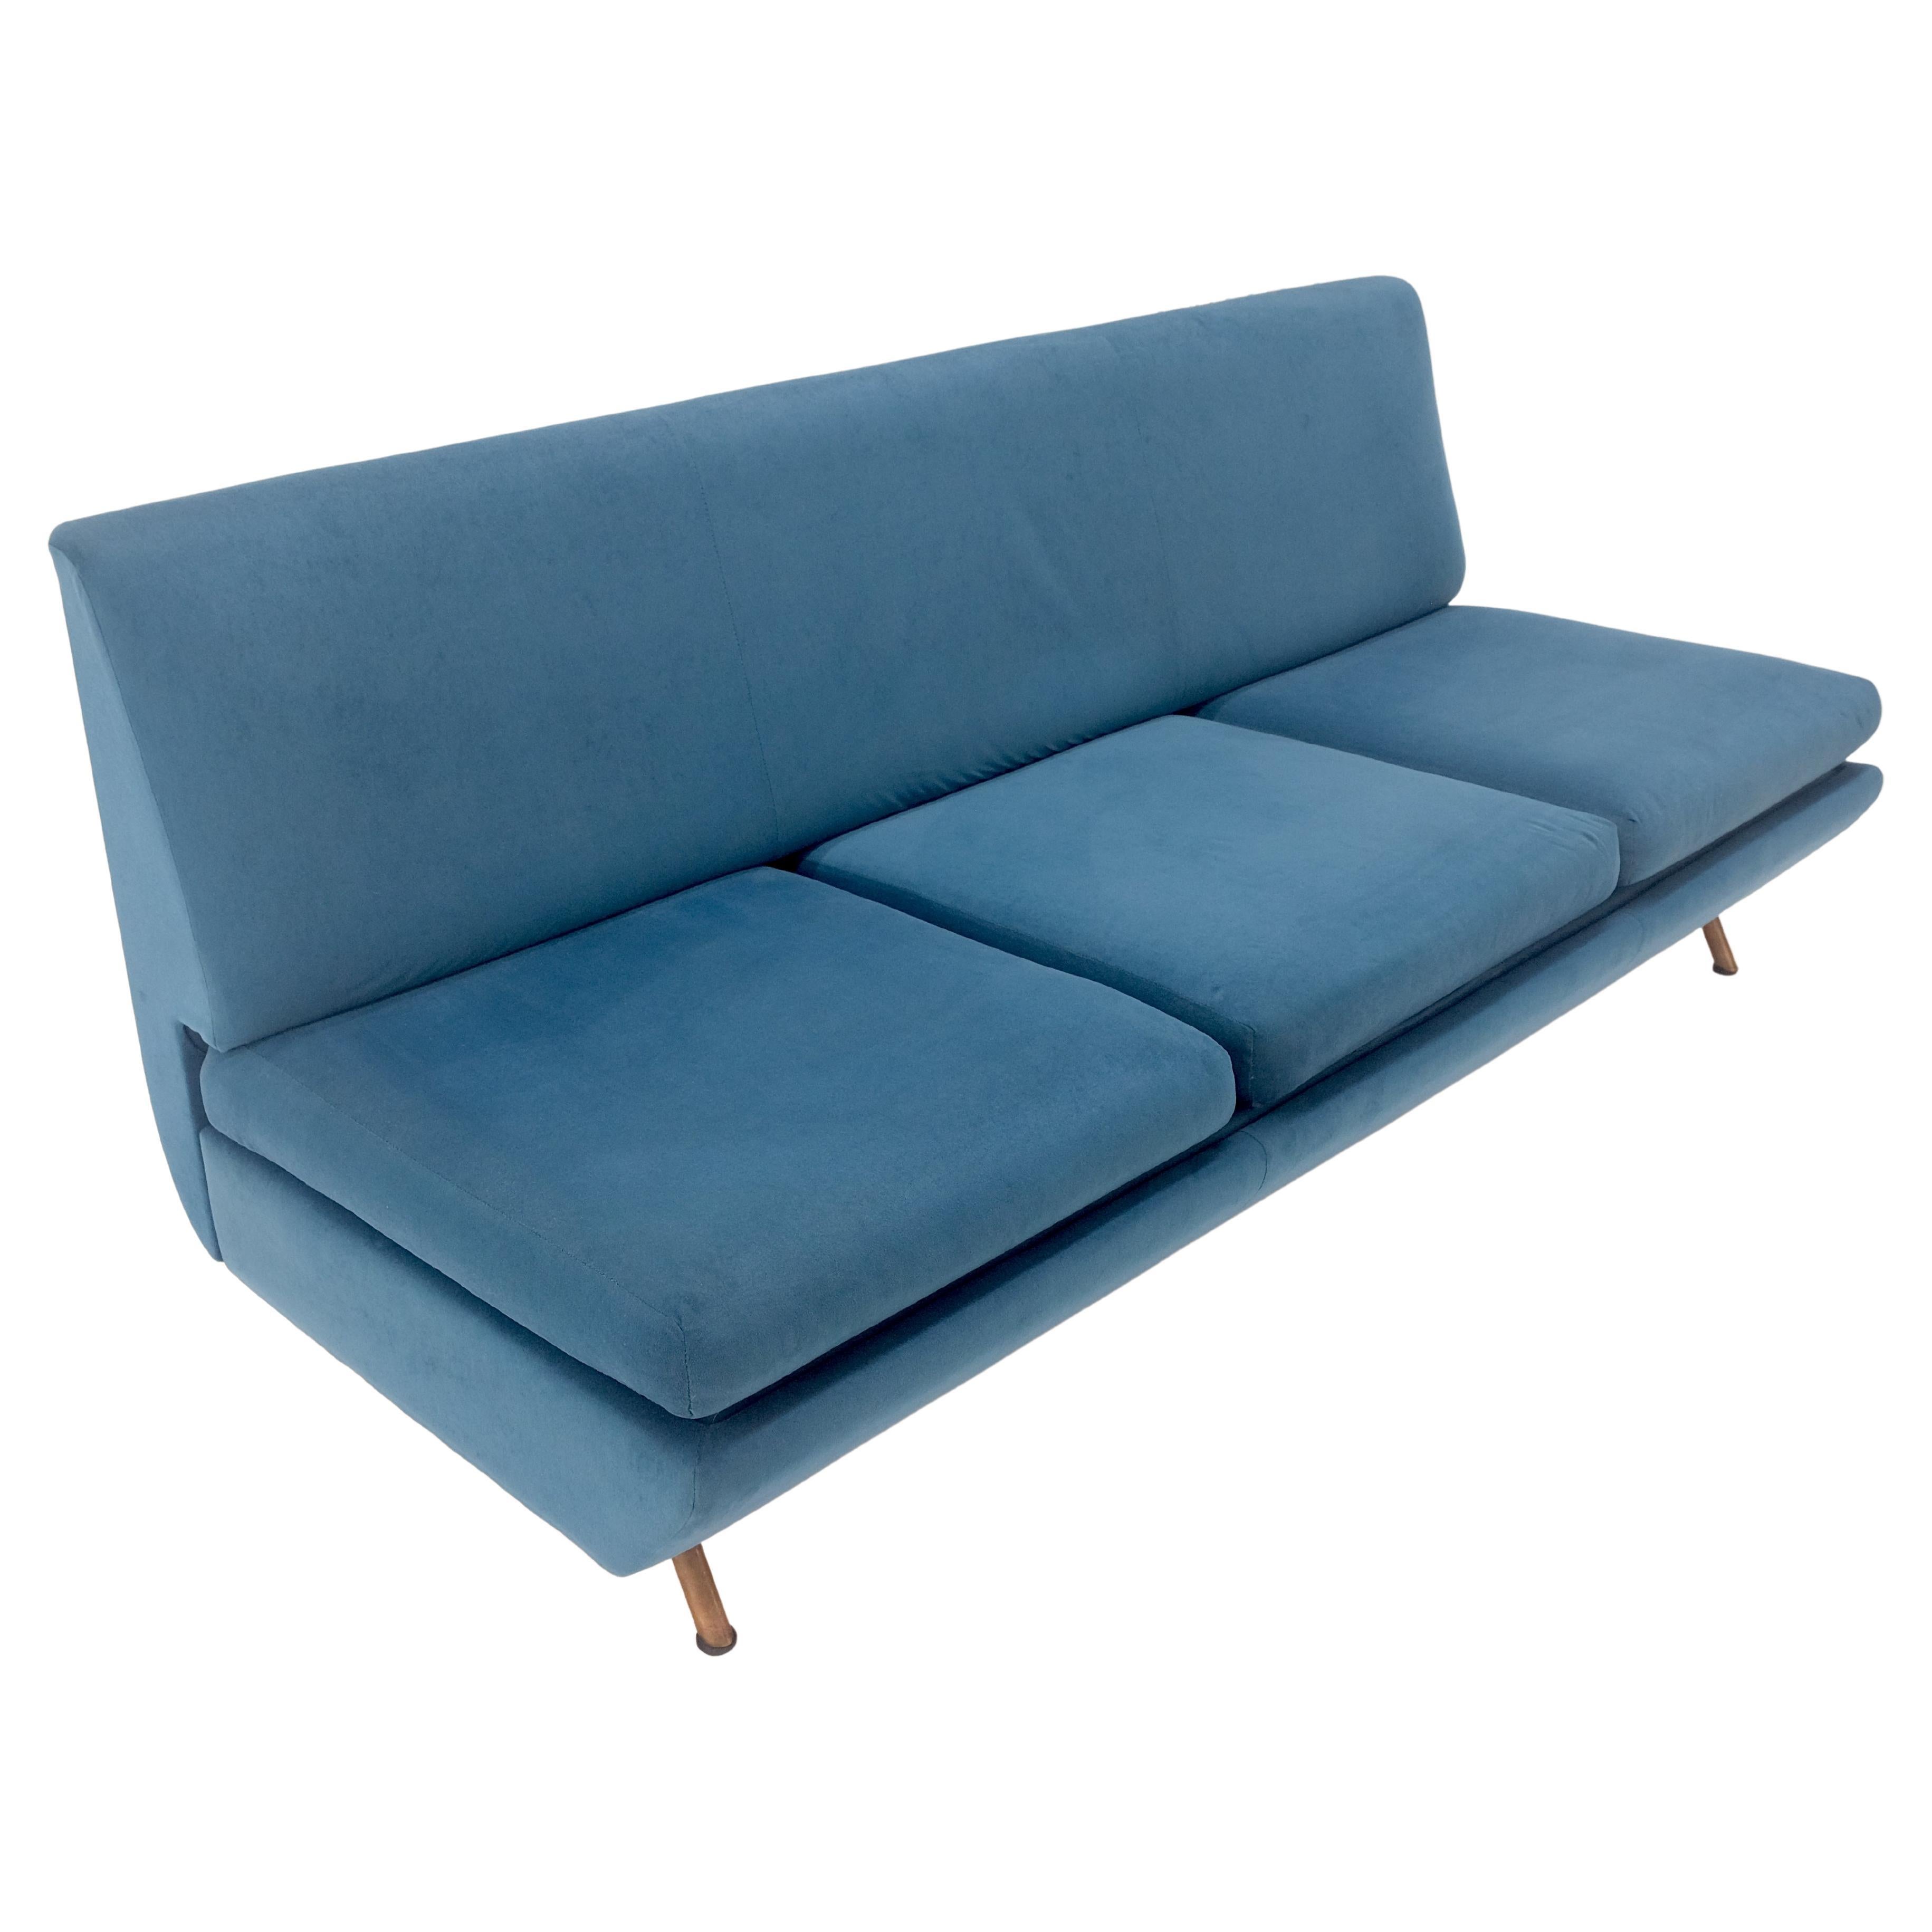 Marco Zanuso Sofa for Arflex Mid Century Italian Modern Teal Upholstery Clean! For Sale